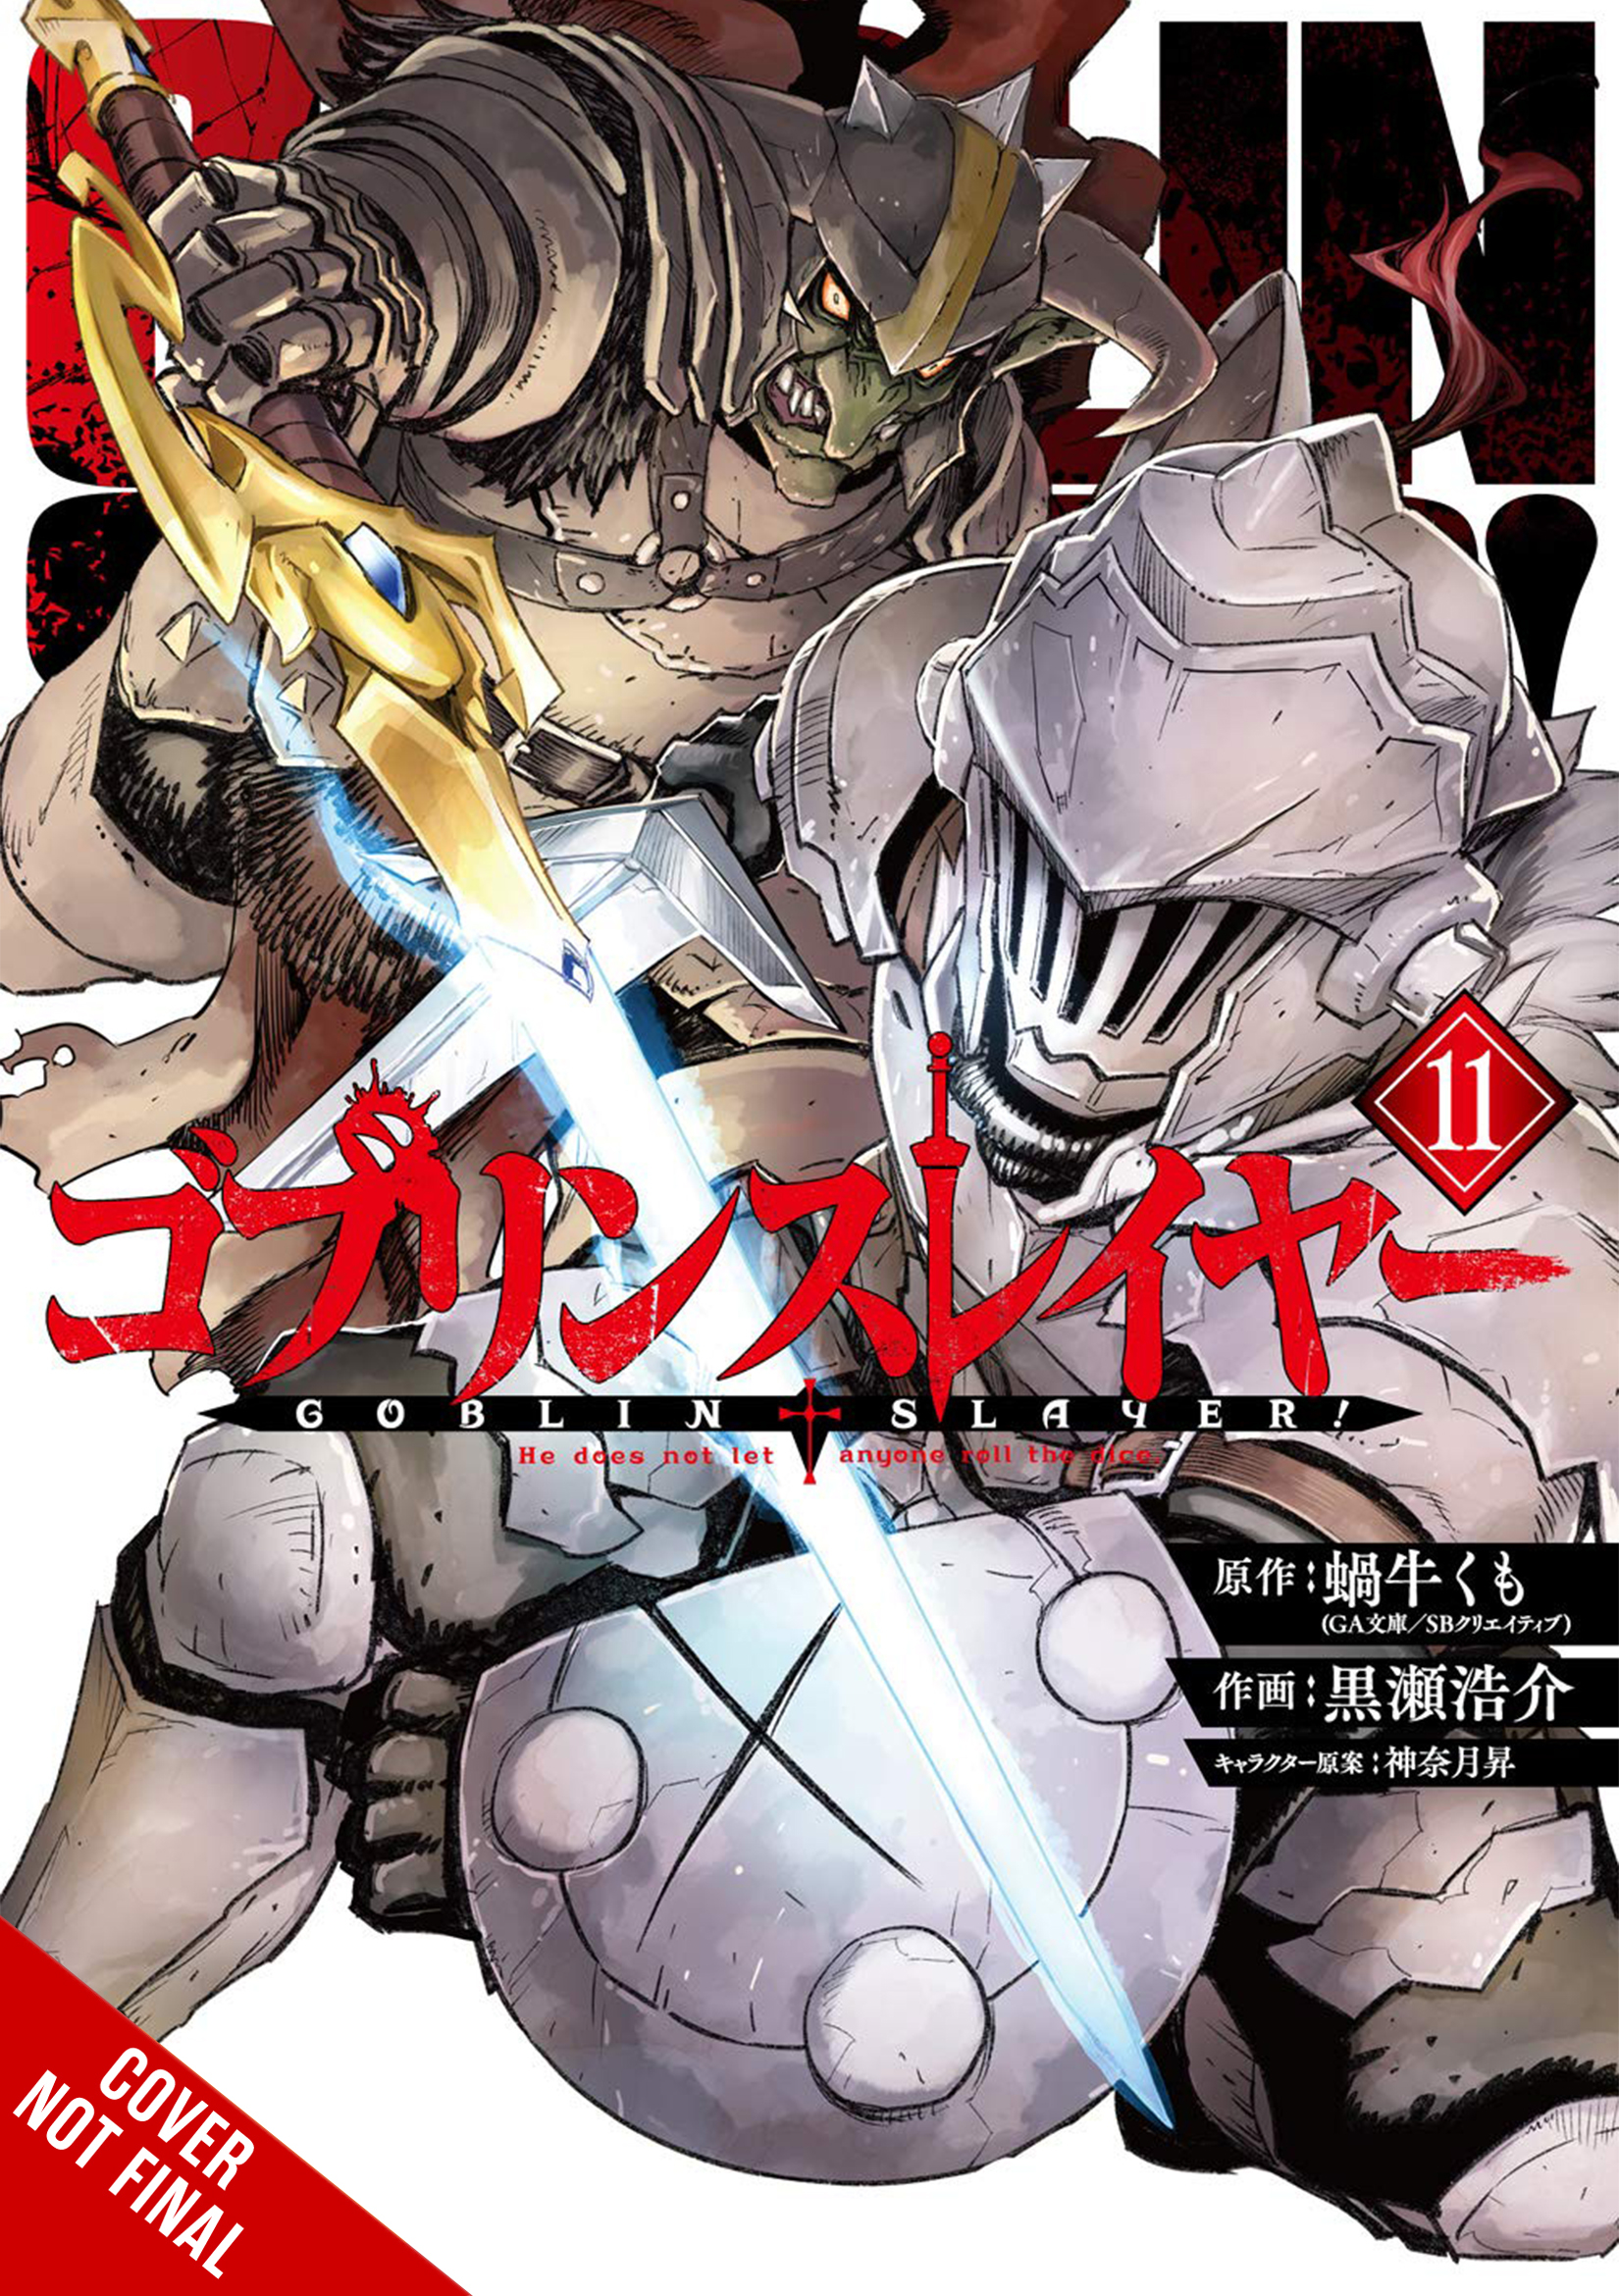 Goblin Slayer Manga Volume 11 (Mature)